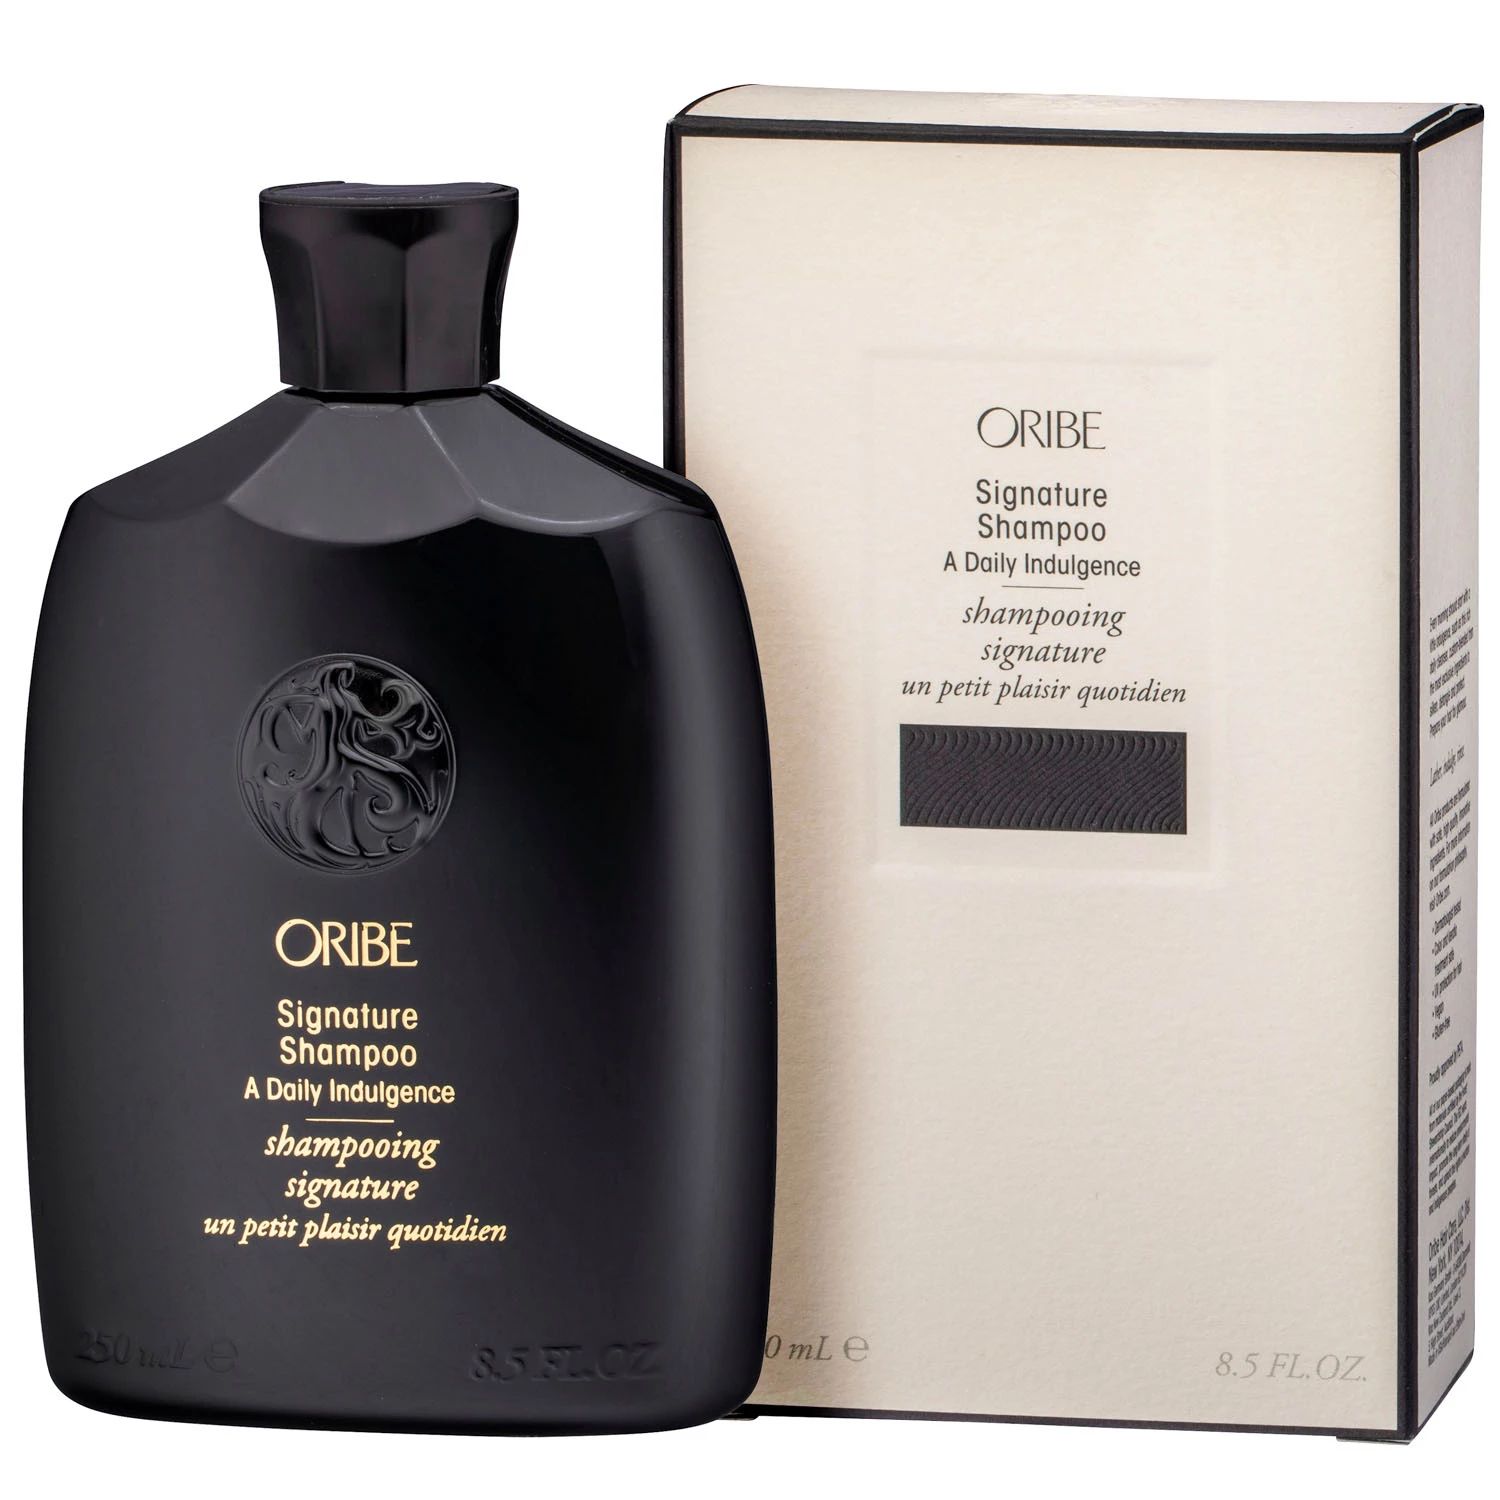 Oribe Signature Shampoo, A Daily Indulgence (8.5 fl. oz.) | Sam's Club